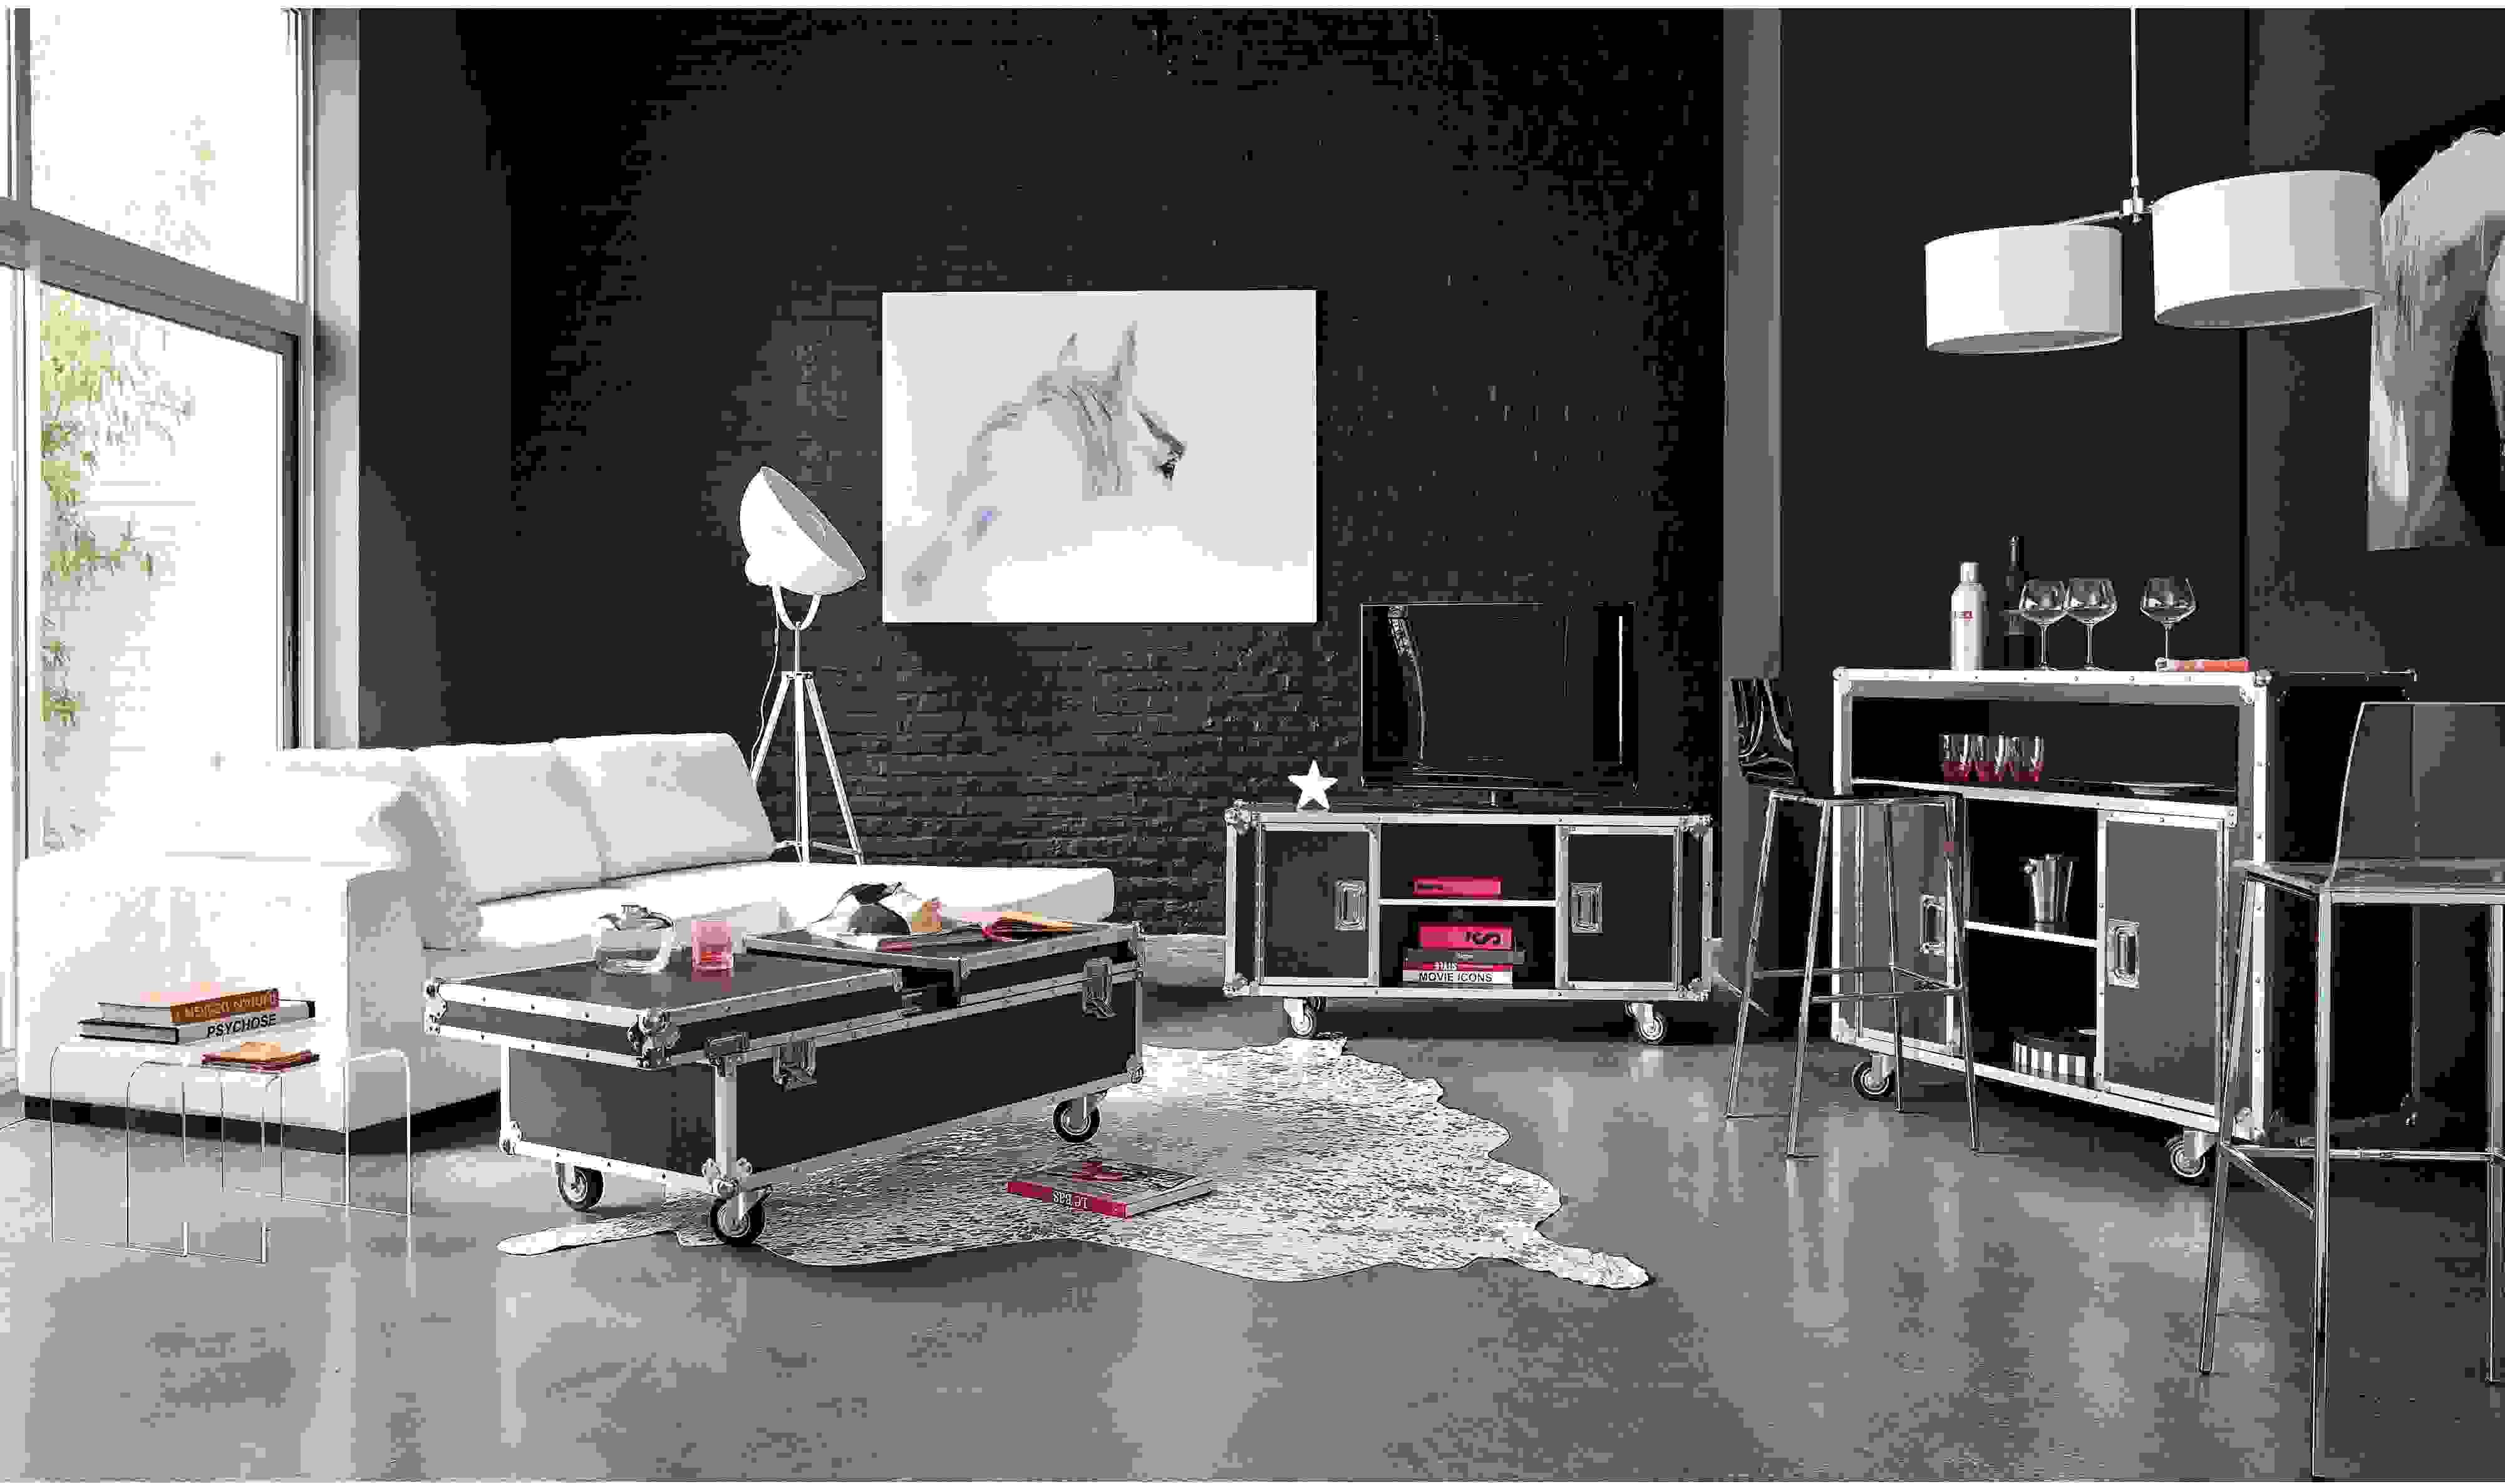 møbler TV-design moderne industrielle interiørdesign gulvmatter hvitt kaffebordstenger deco interiør stue svart